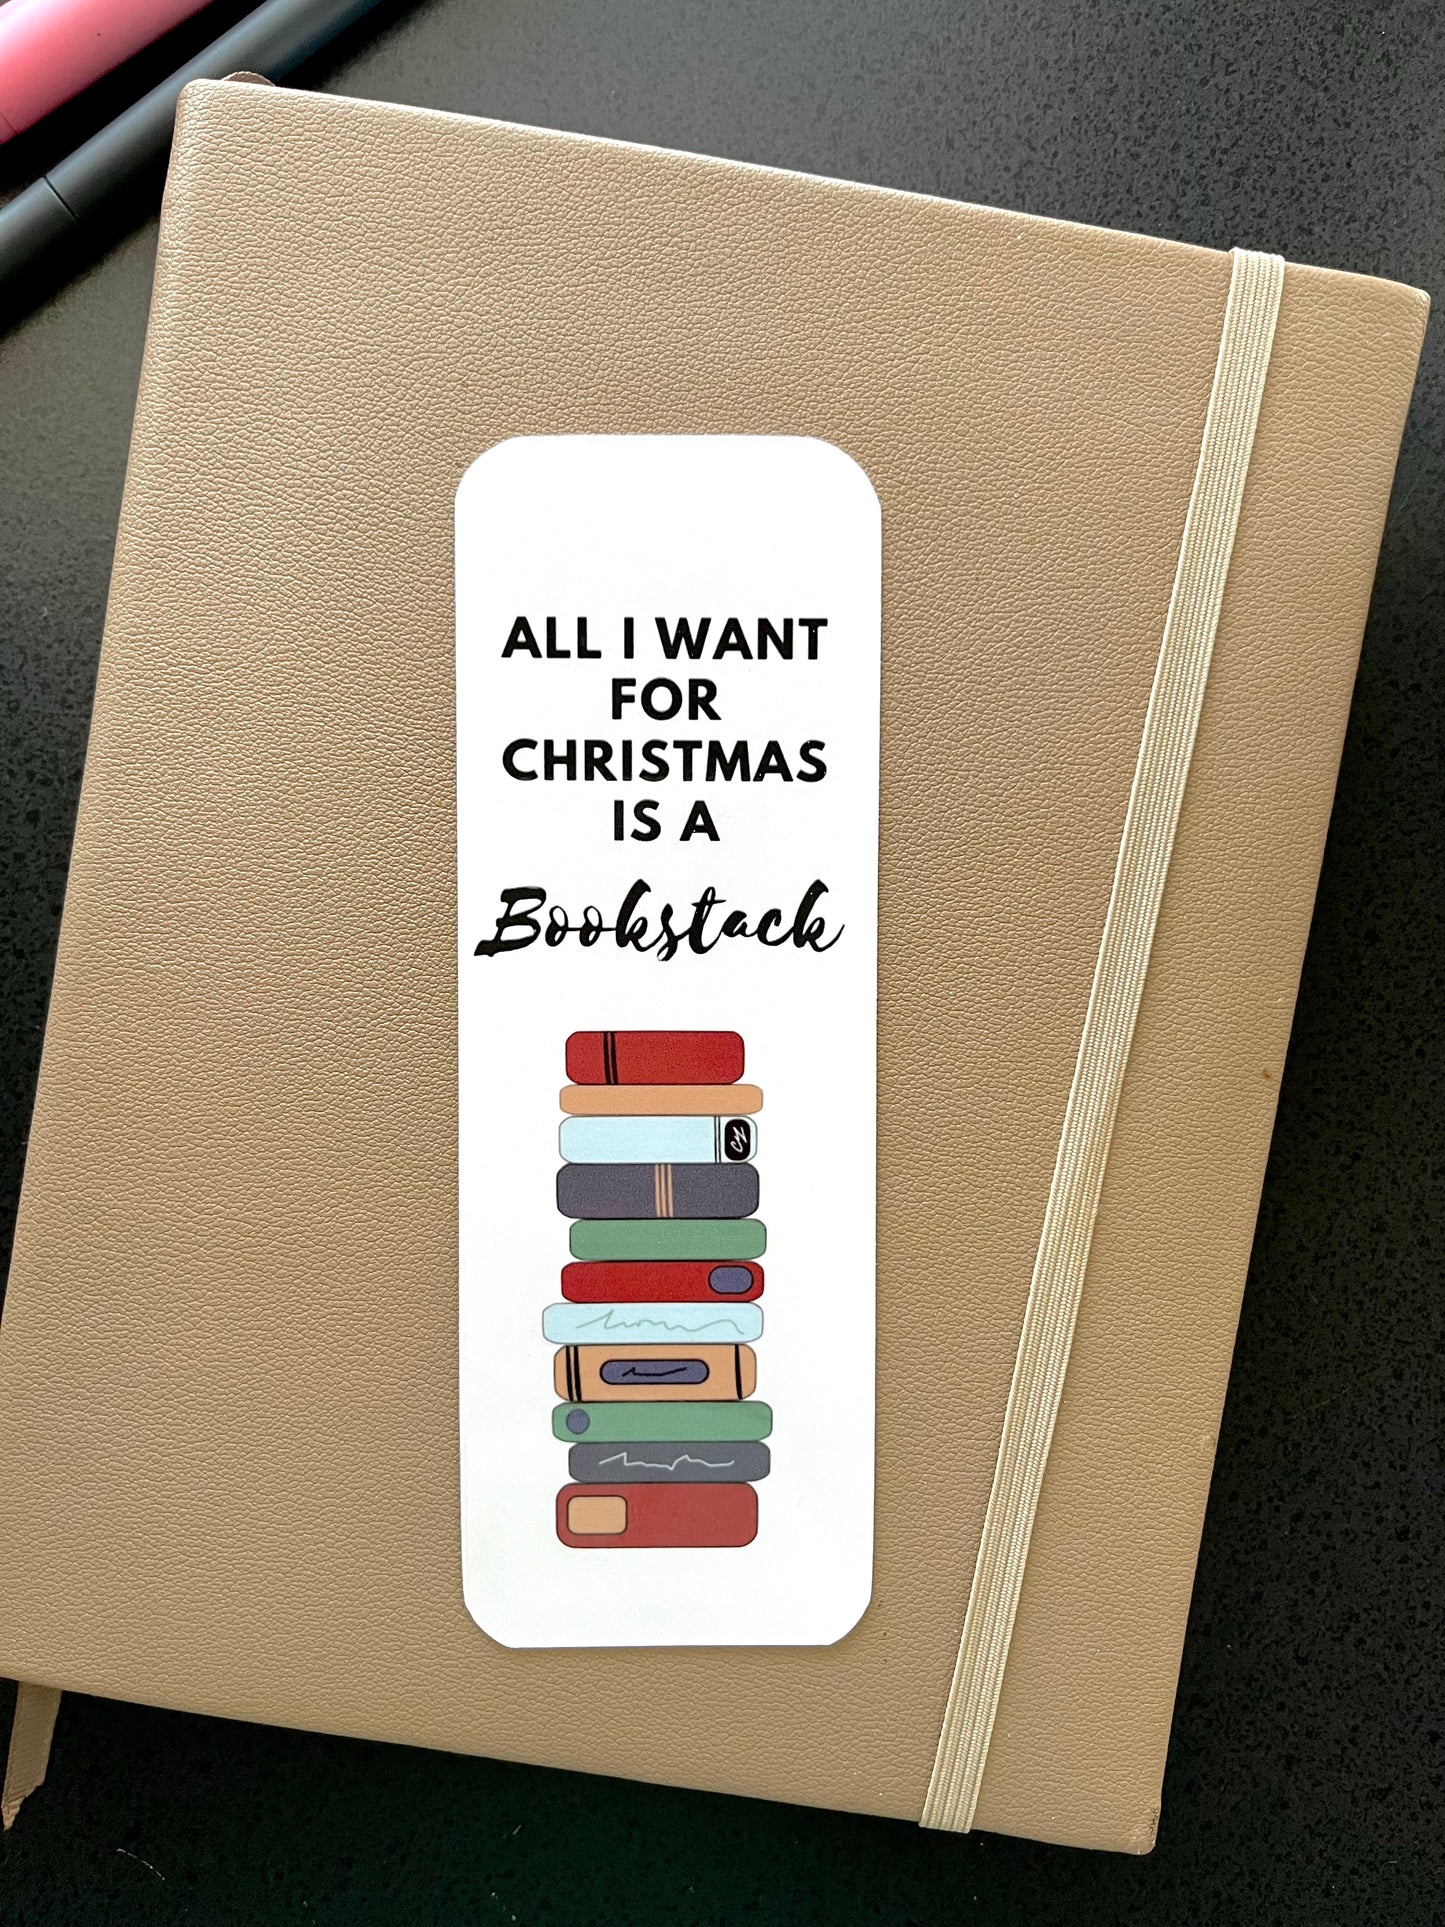 Bookstack laminated bookmark